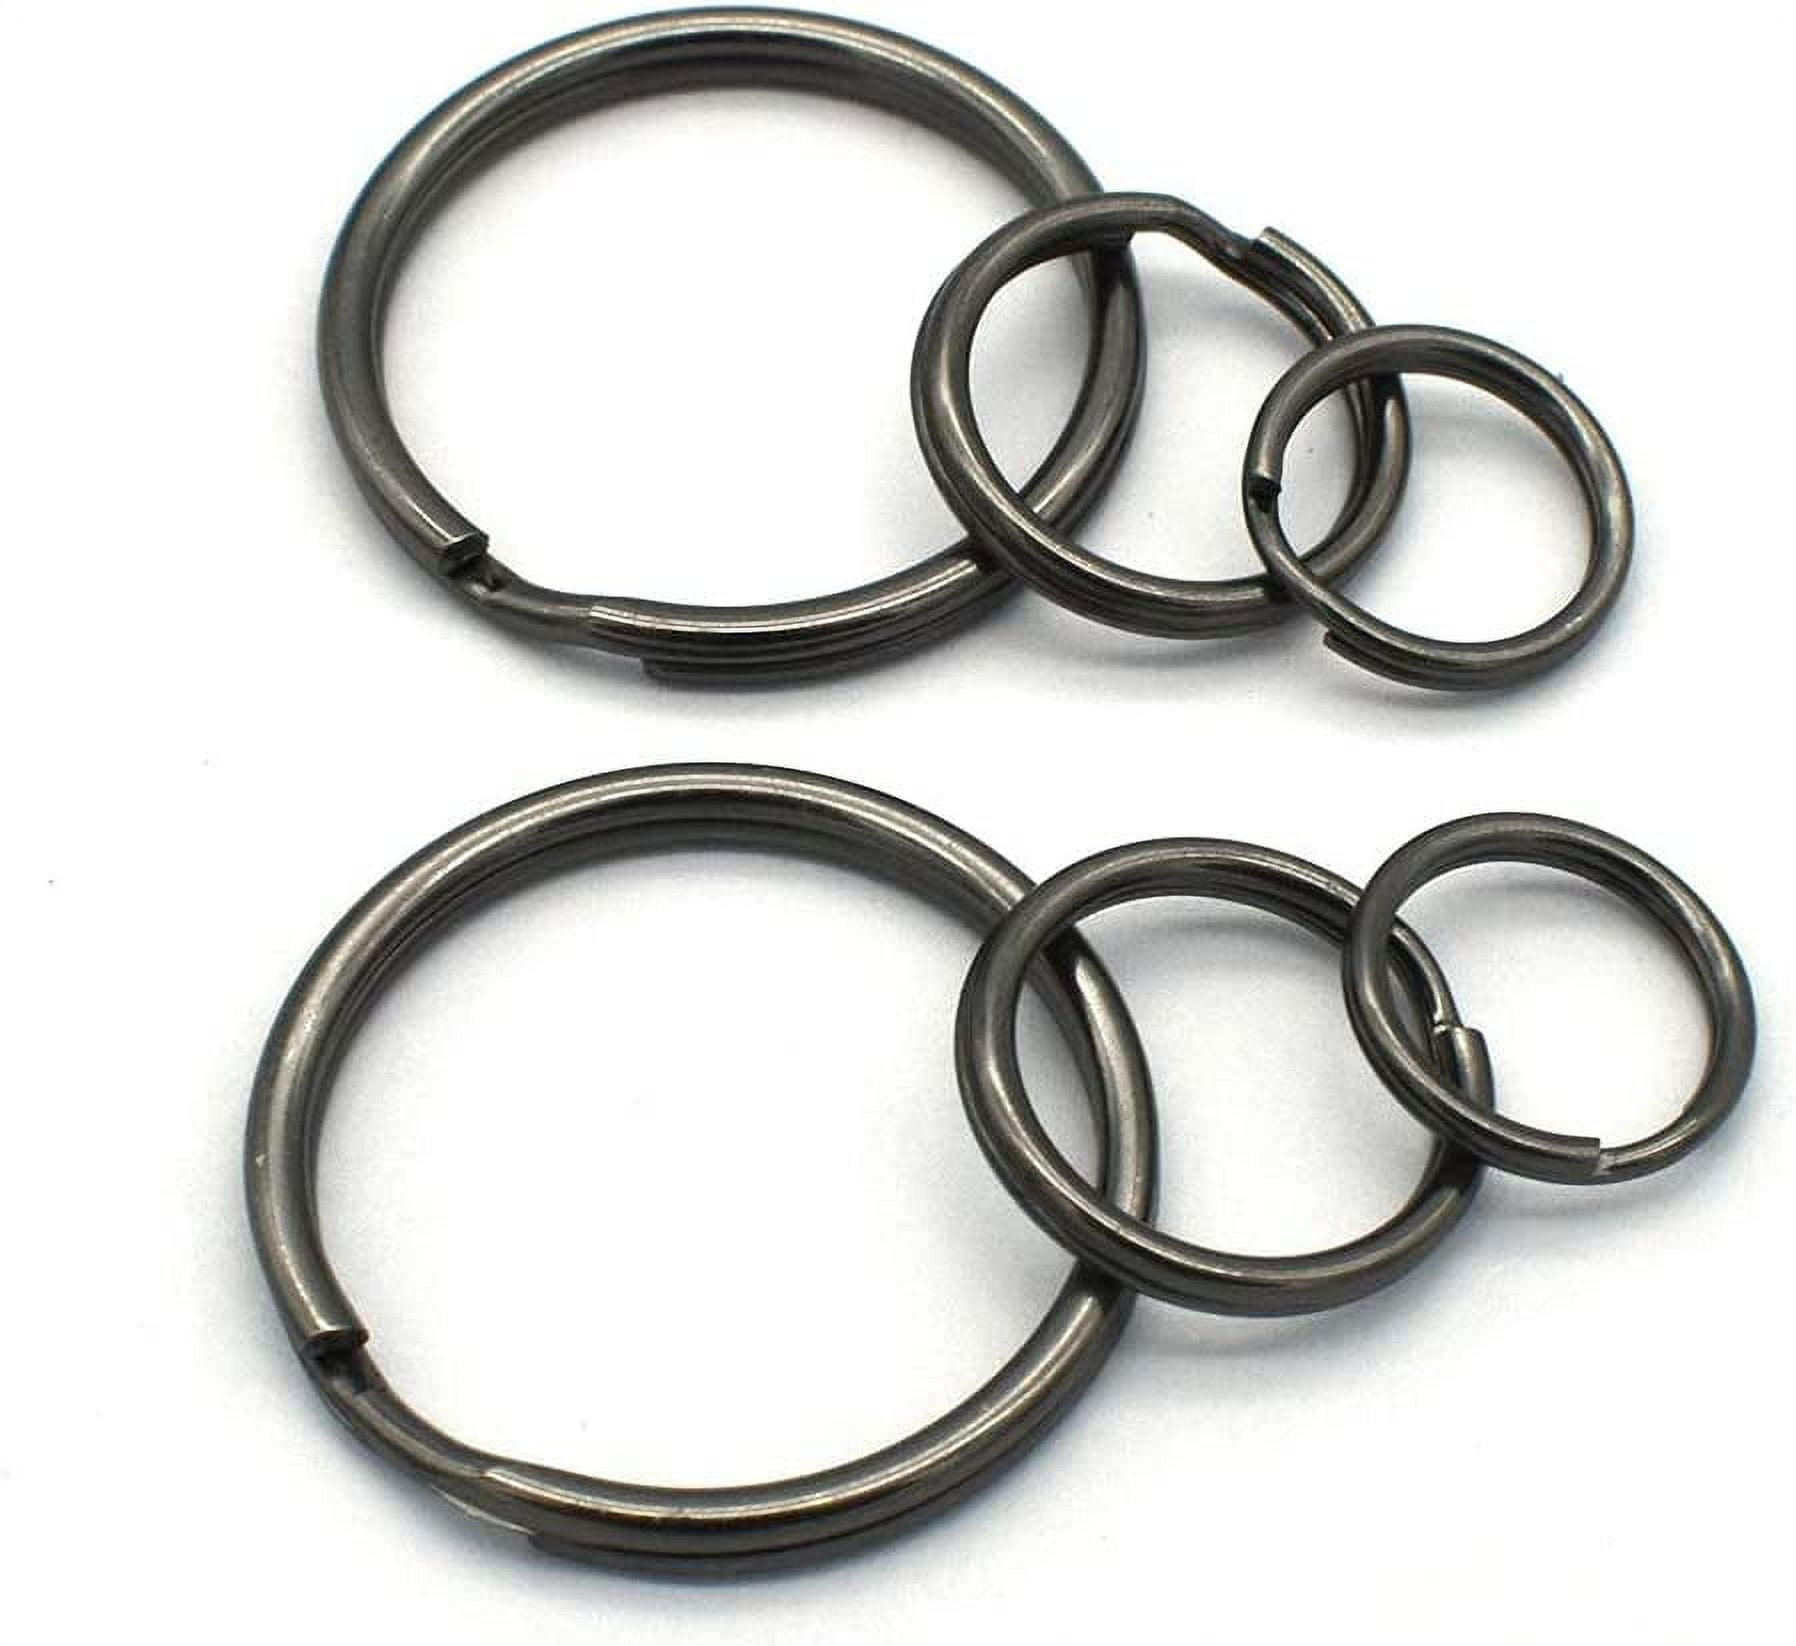 Metal Large Key Ring 7.7cm Big Key Holder Ring with Swivel Clasps 3 Split  Rings